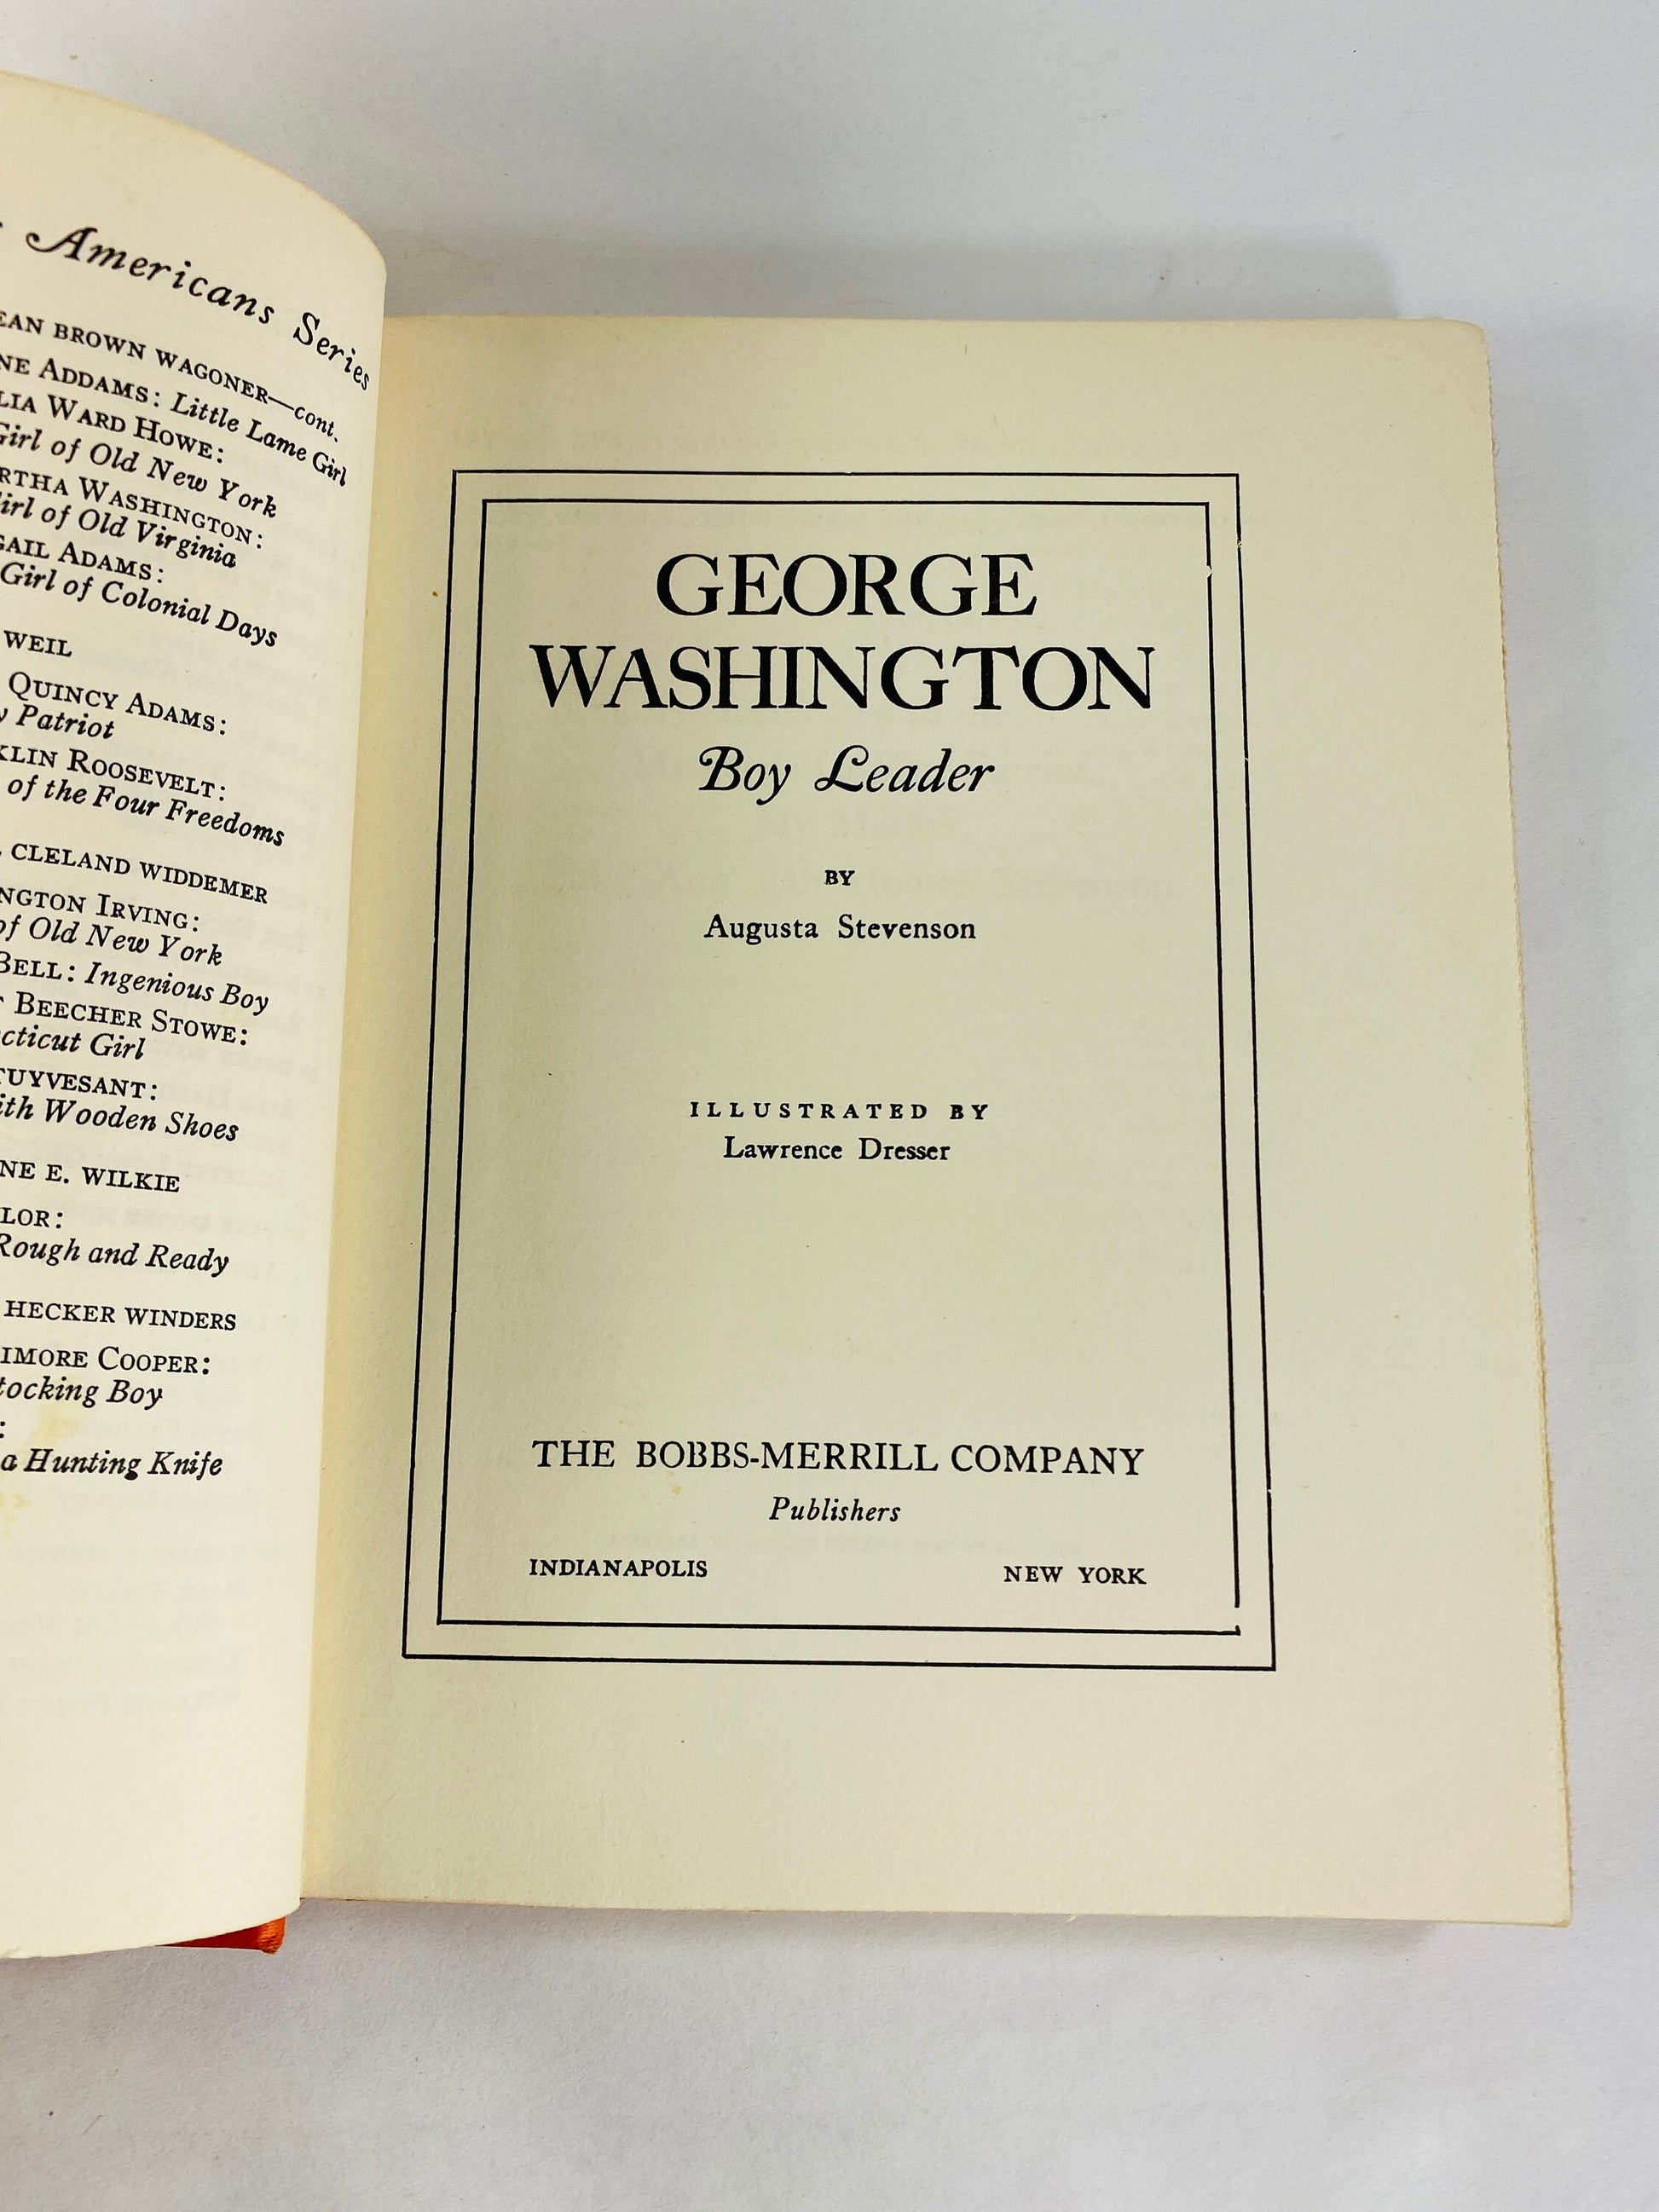 George Washington Boy Leader vintage book circa 1953 by Augusta Stevenson. Biography of the first American president written for children.